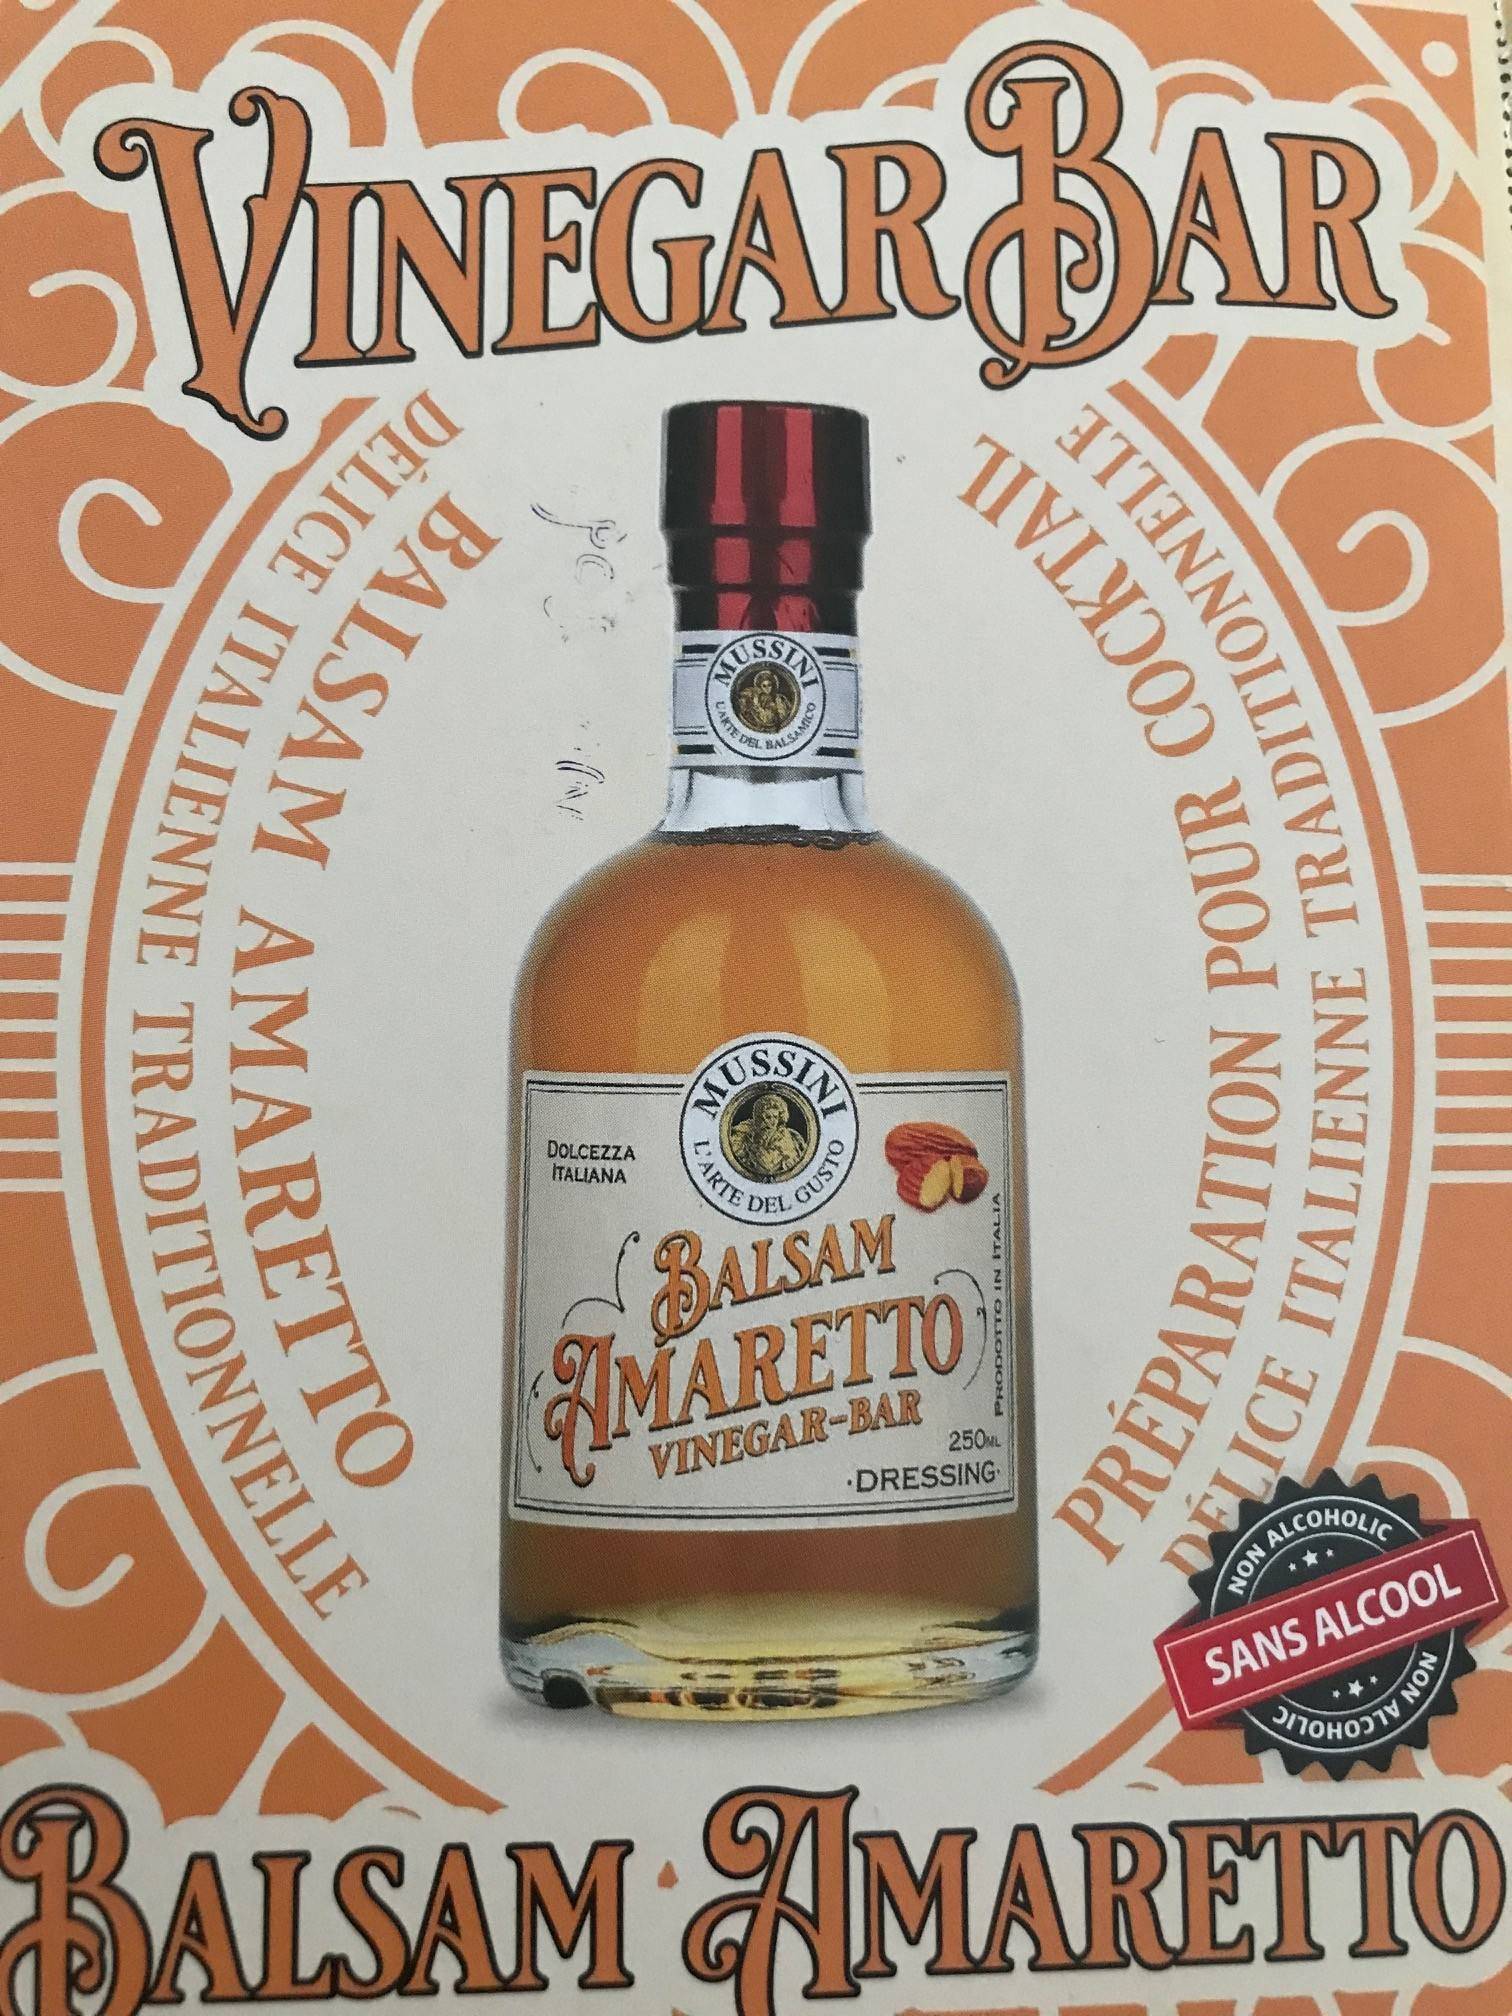 Vinegar Bar Amaretto